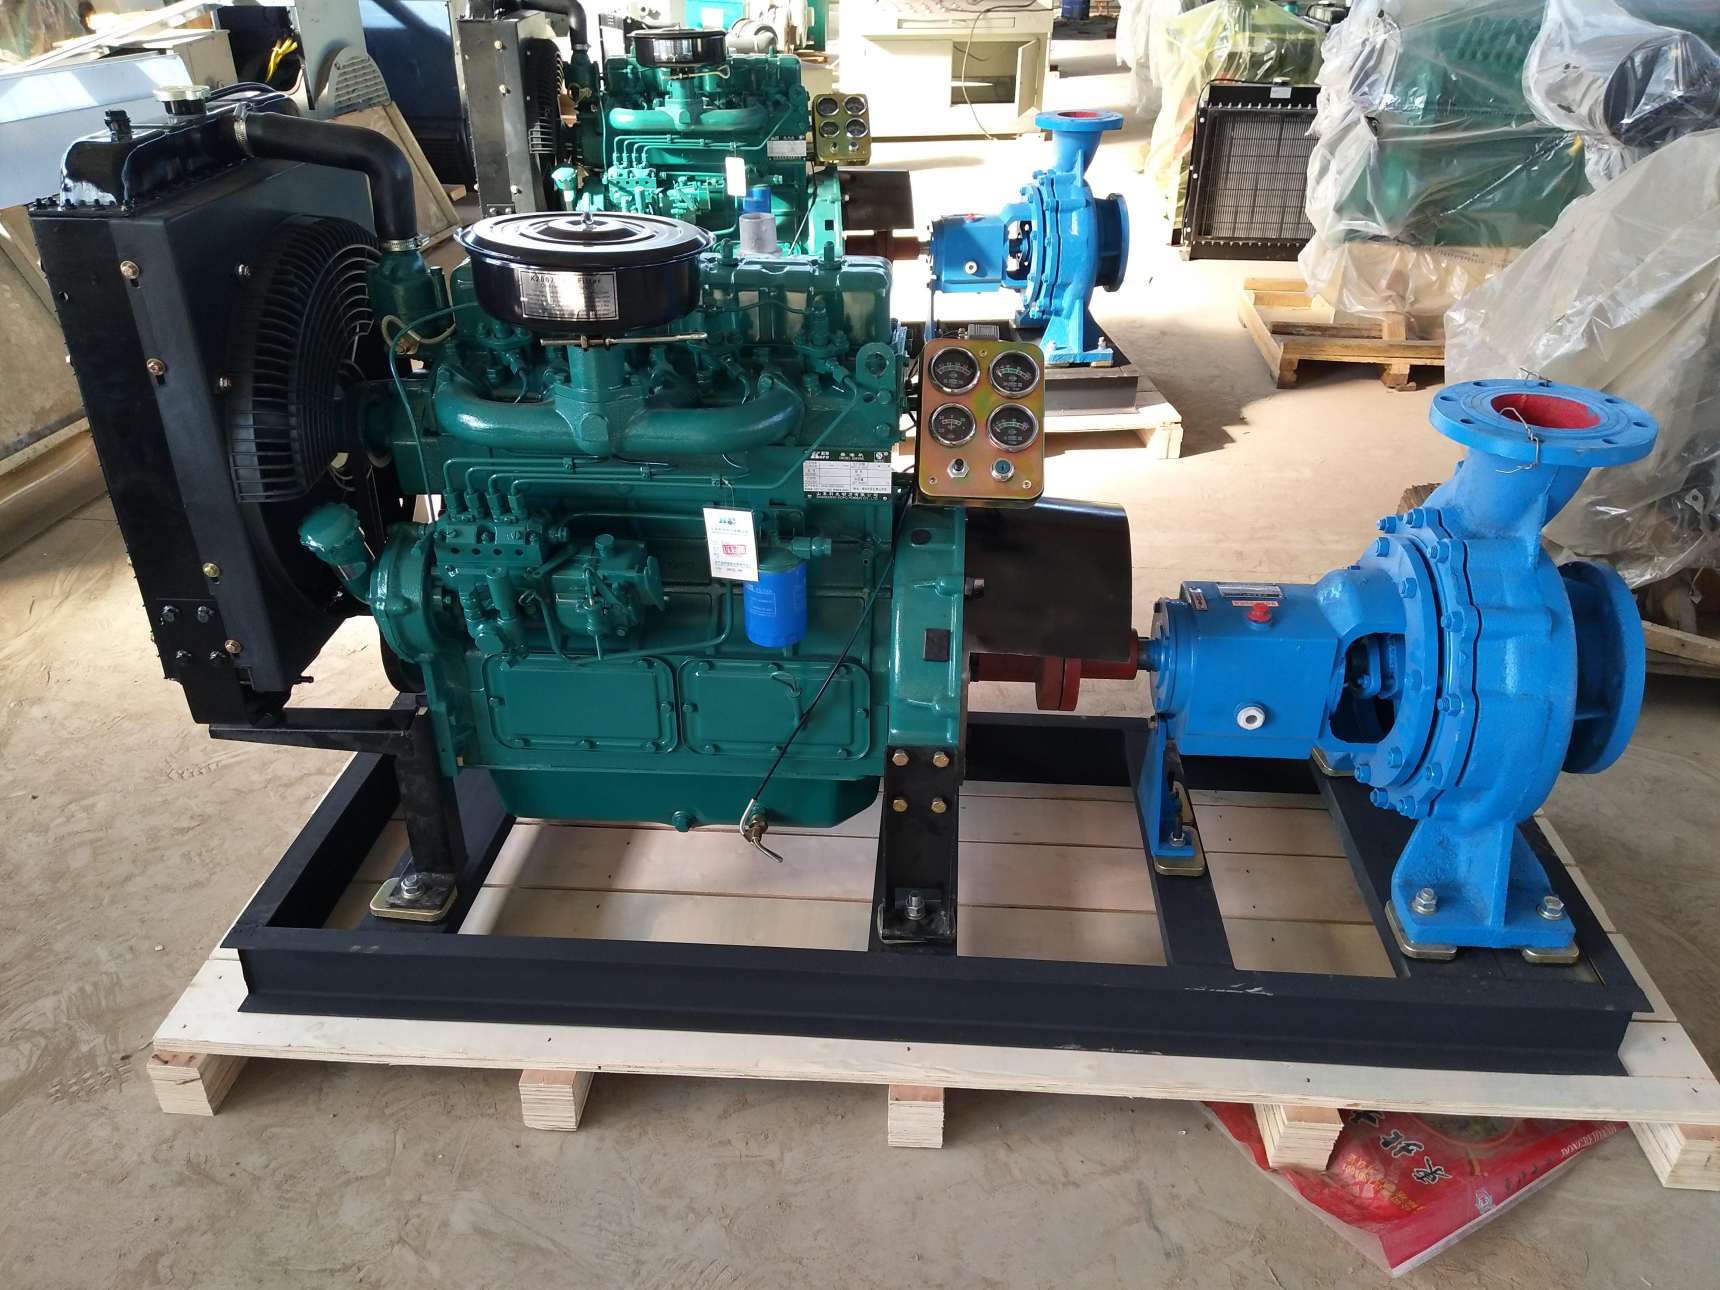 6M26C550-18 Weichai baudouin series Marine engines boat engines boat motor 4 stroke 405kw 550hp 1800rpm